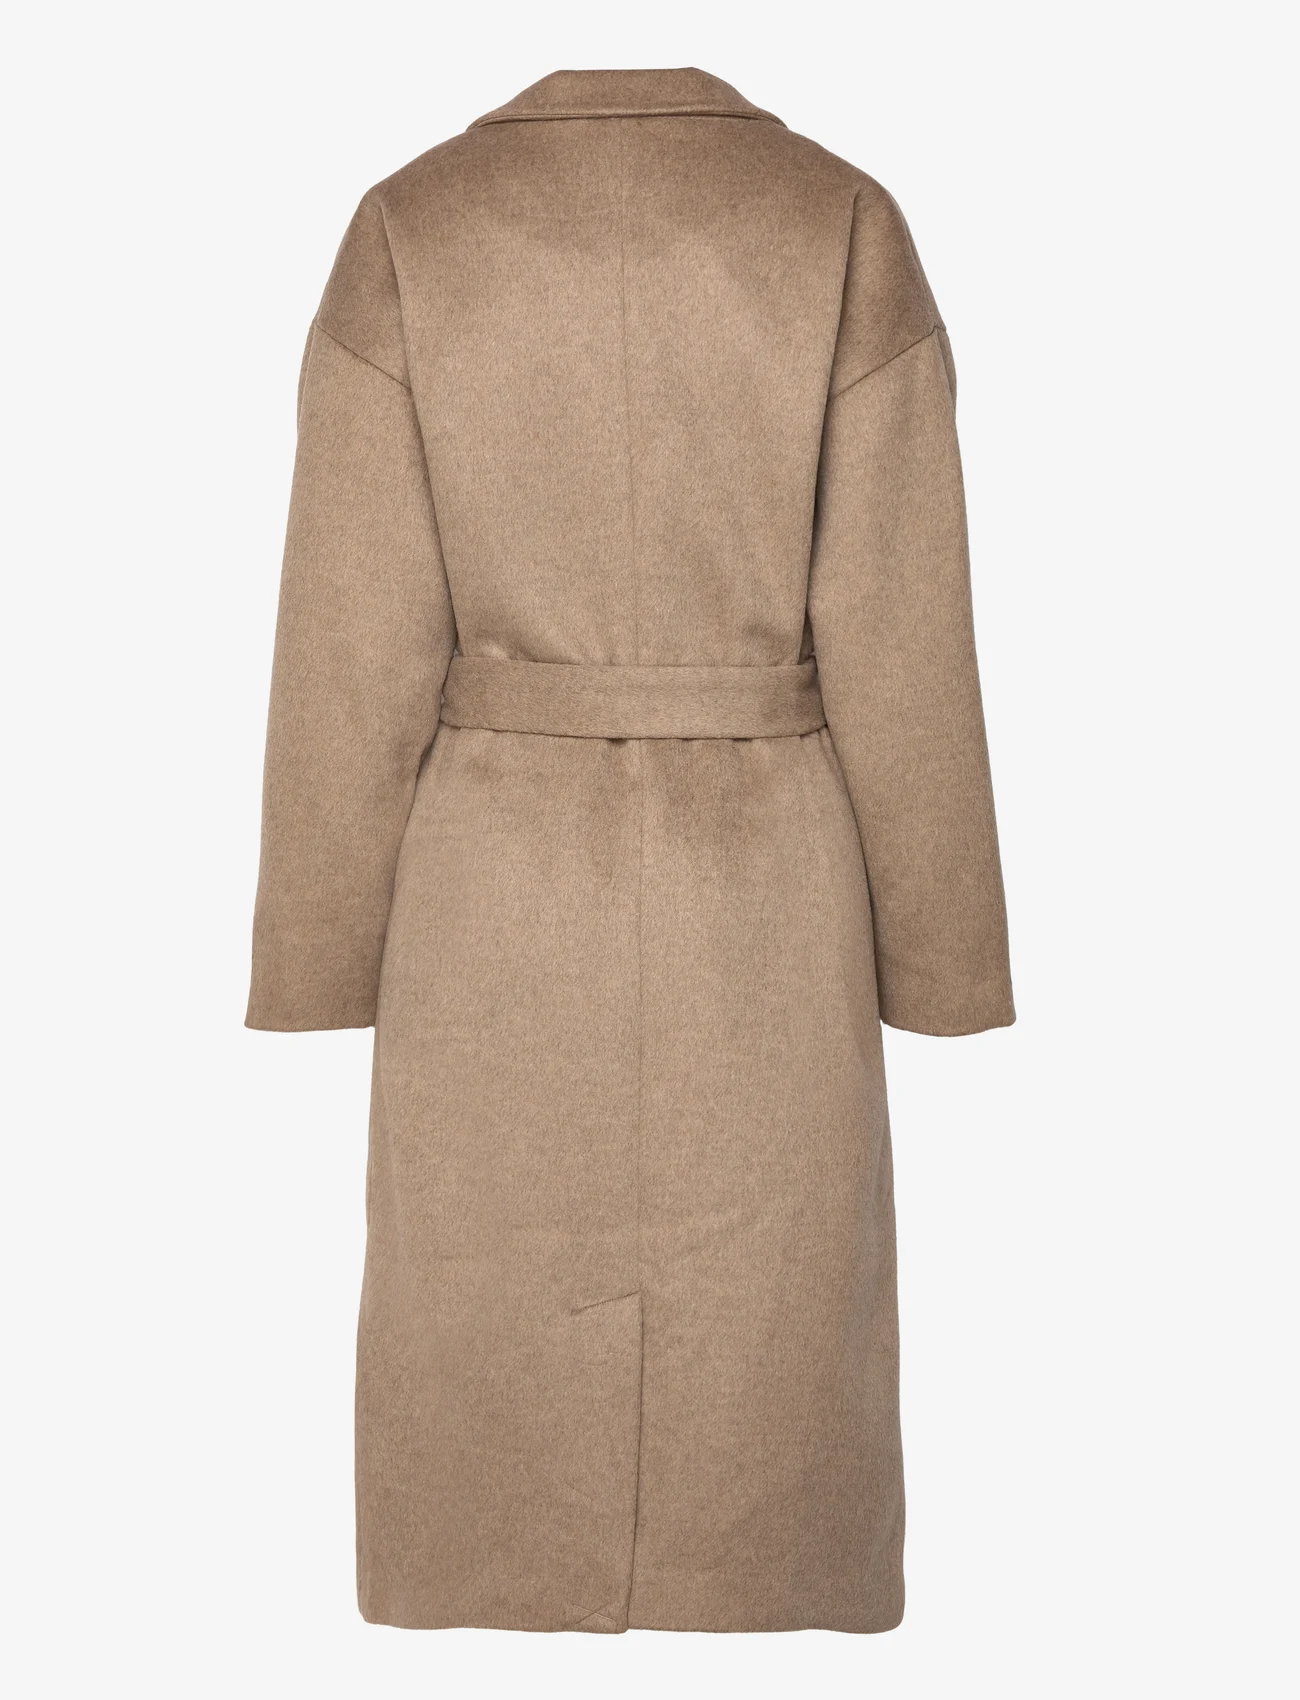 Bruuns Bazaar - KatarinaBBBJezze coat - vinterkappor - roasted grey - 1